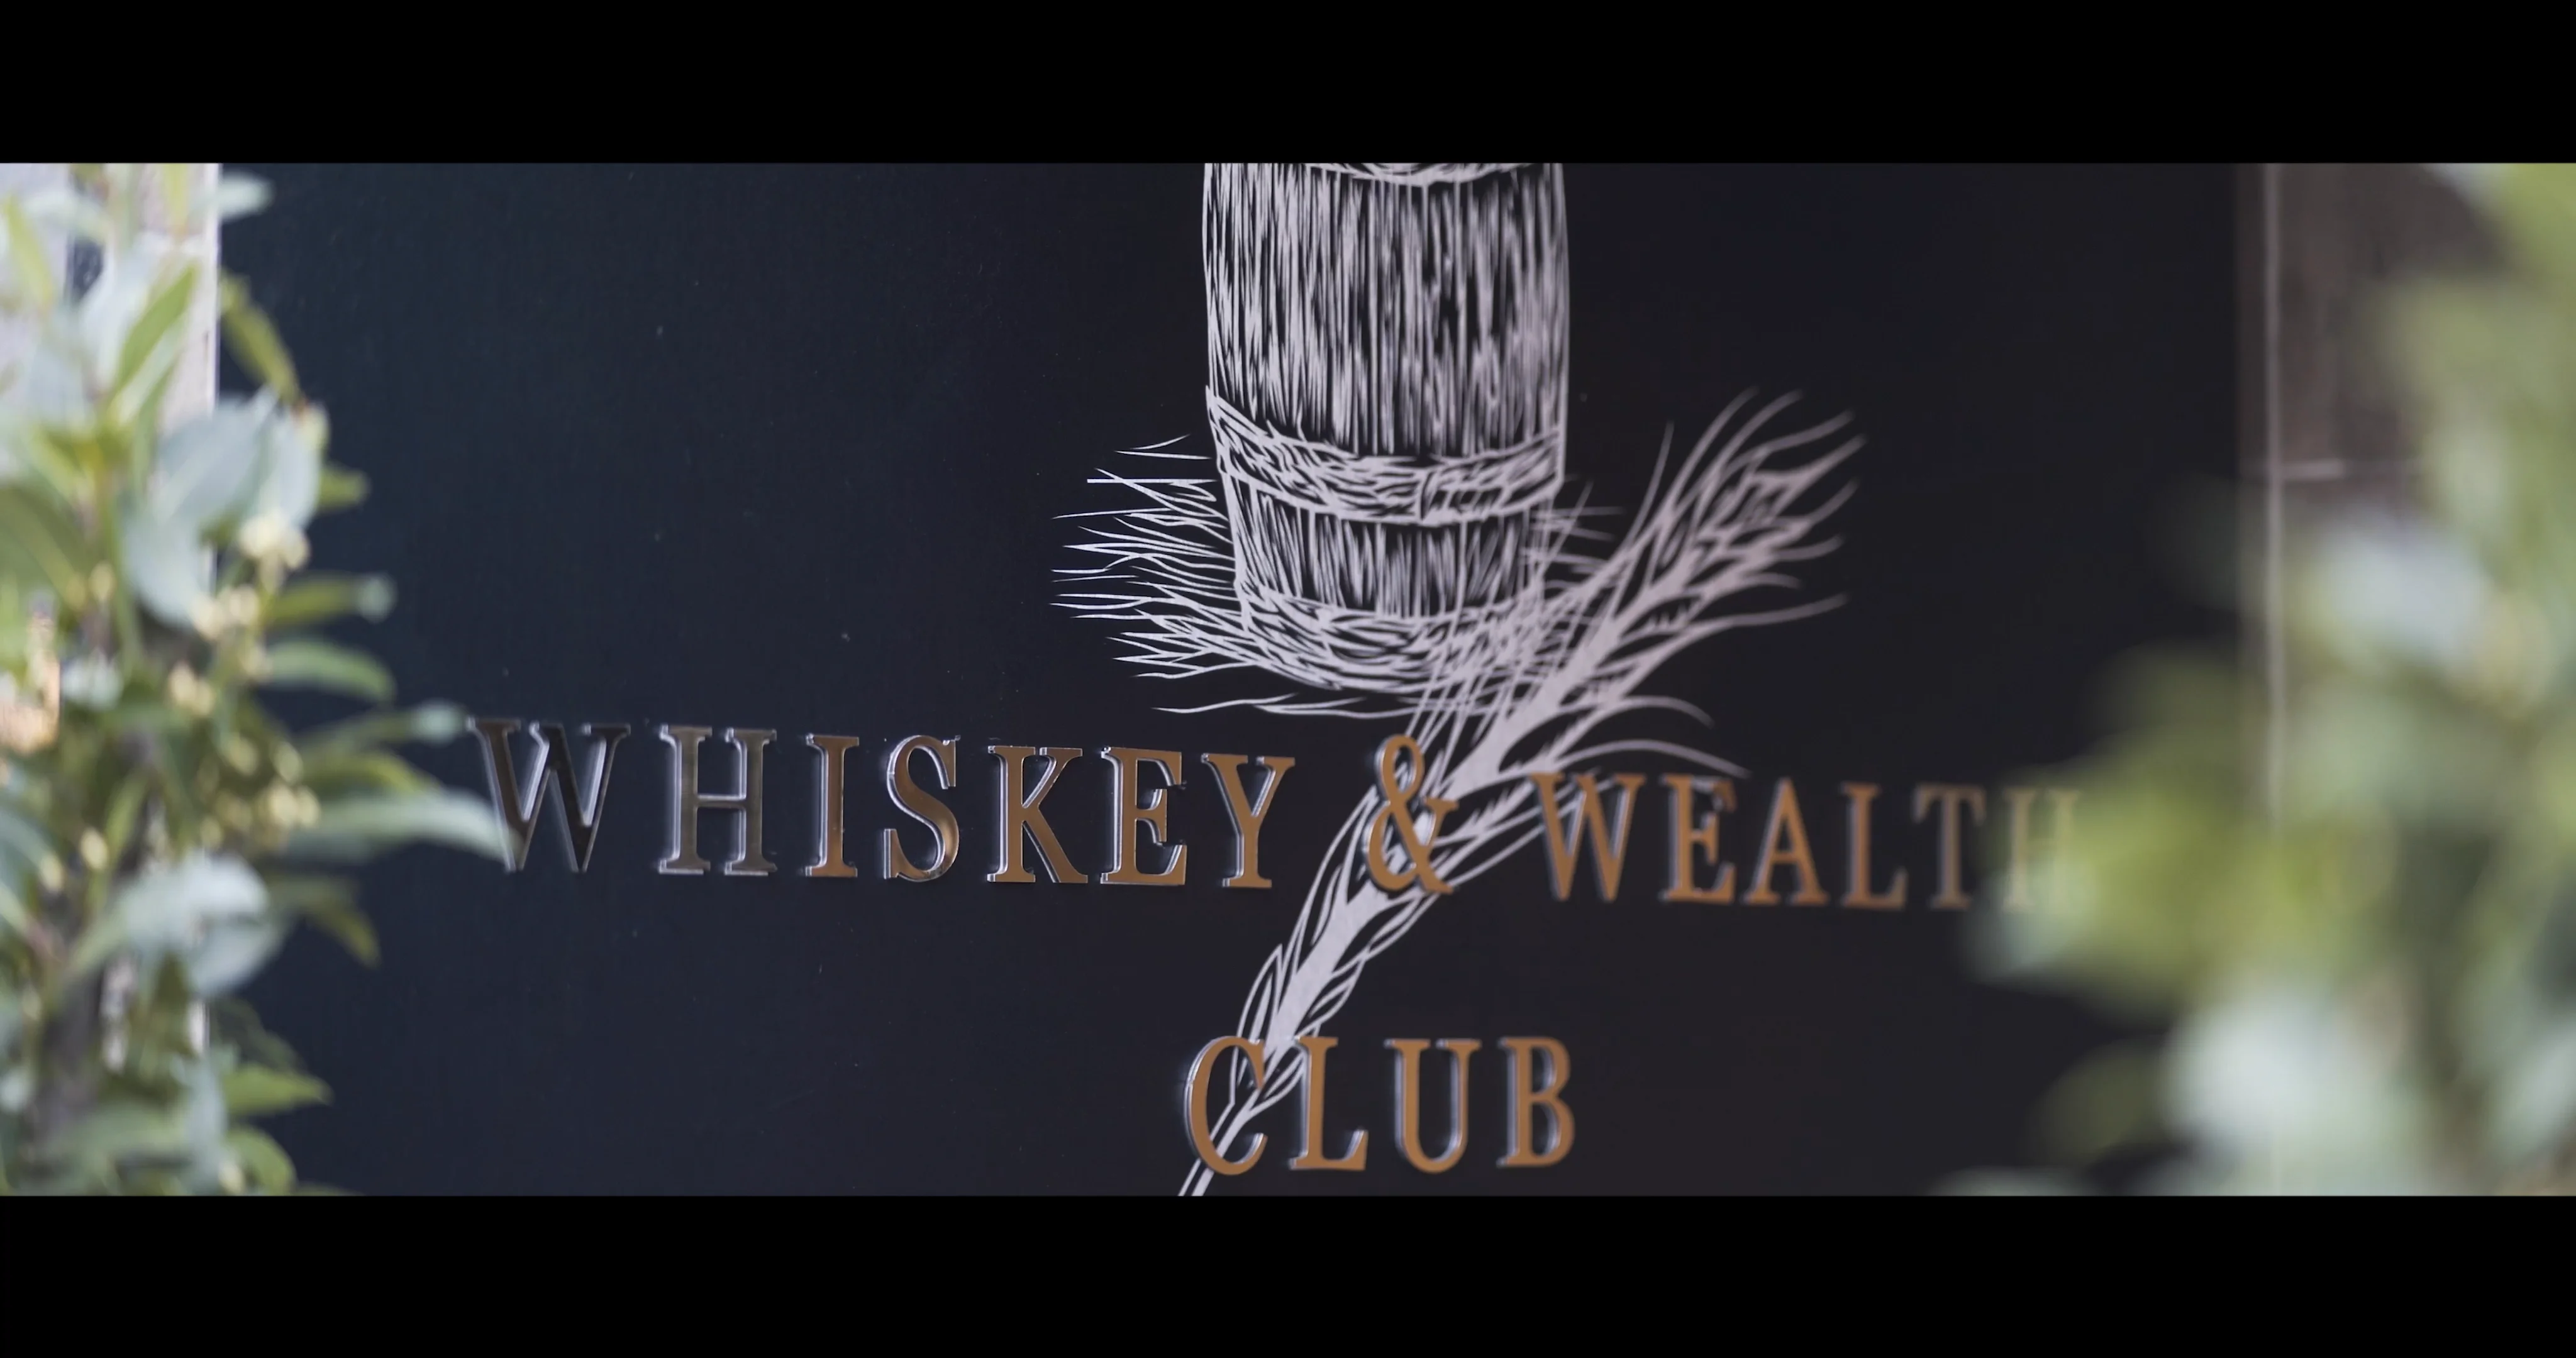 Whiskey Wealth